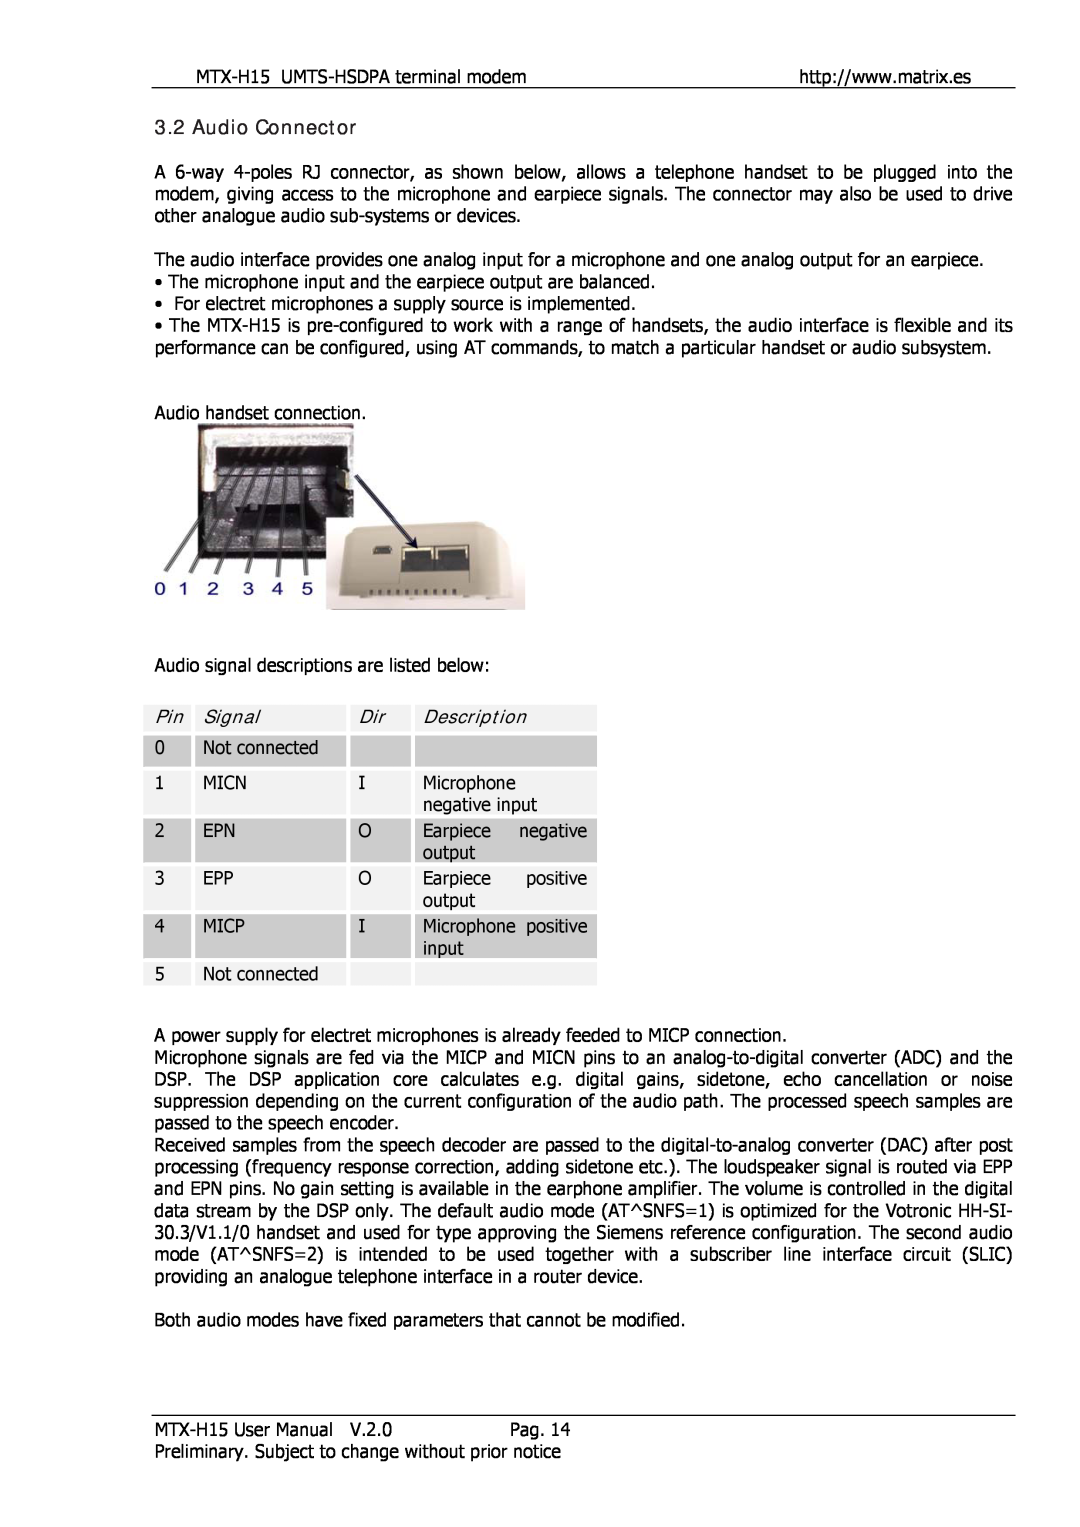 Siemens MTX-H15 user manual Audio Connector, Signal, Dir Description 